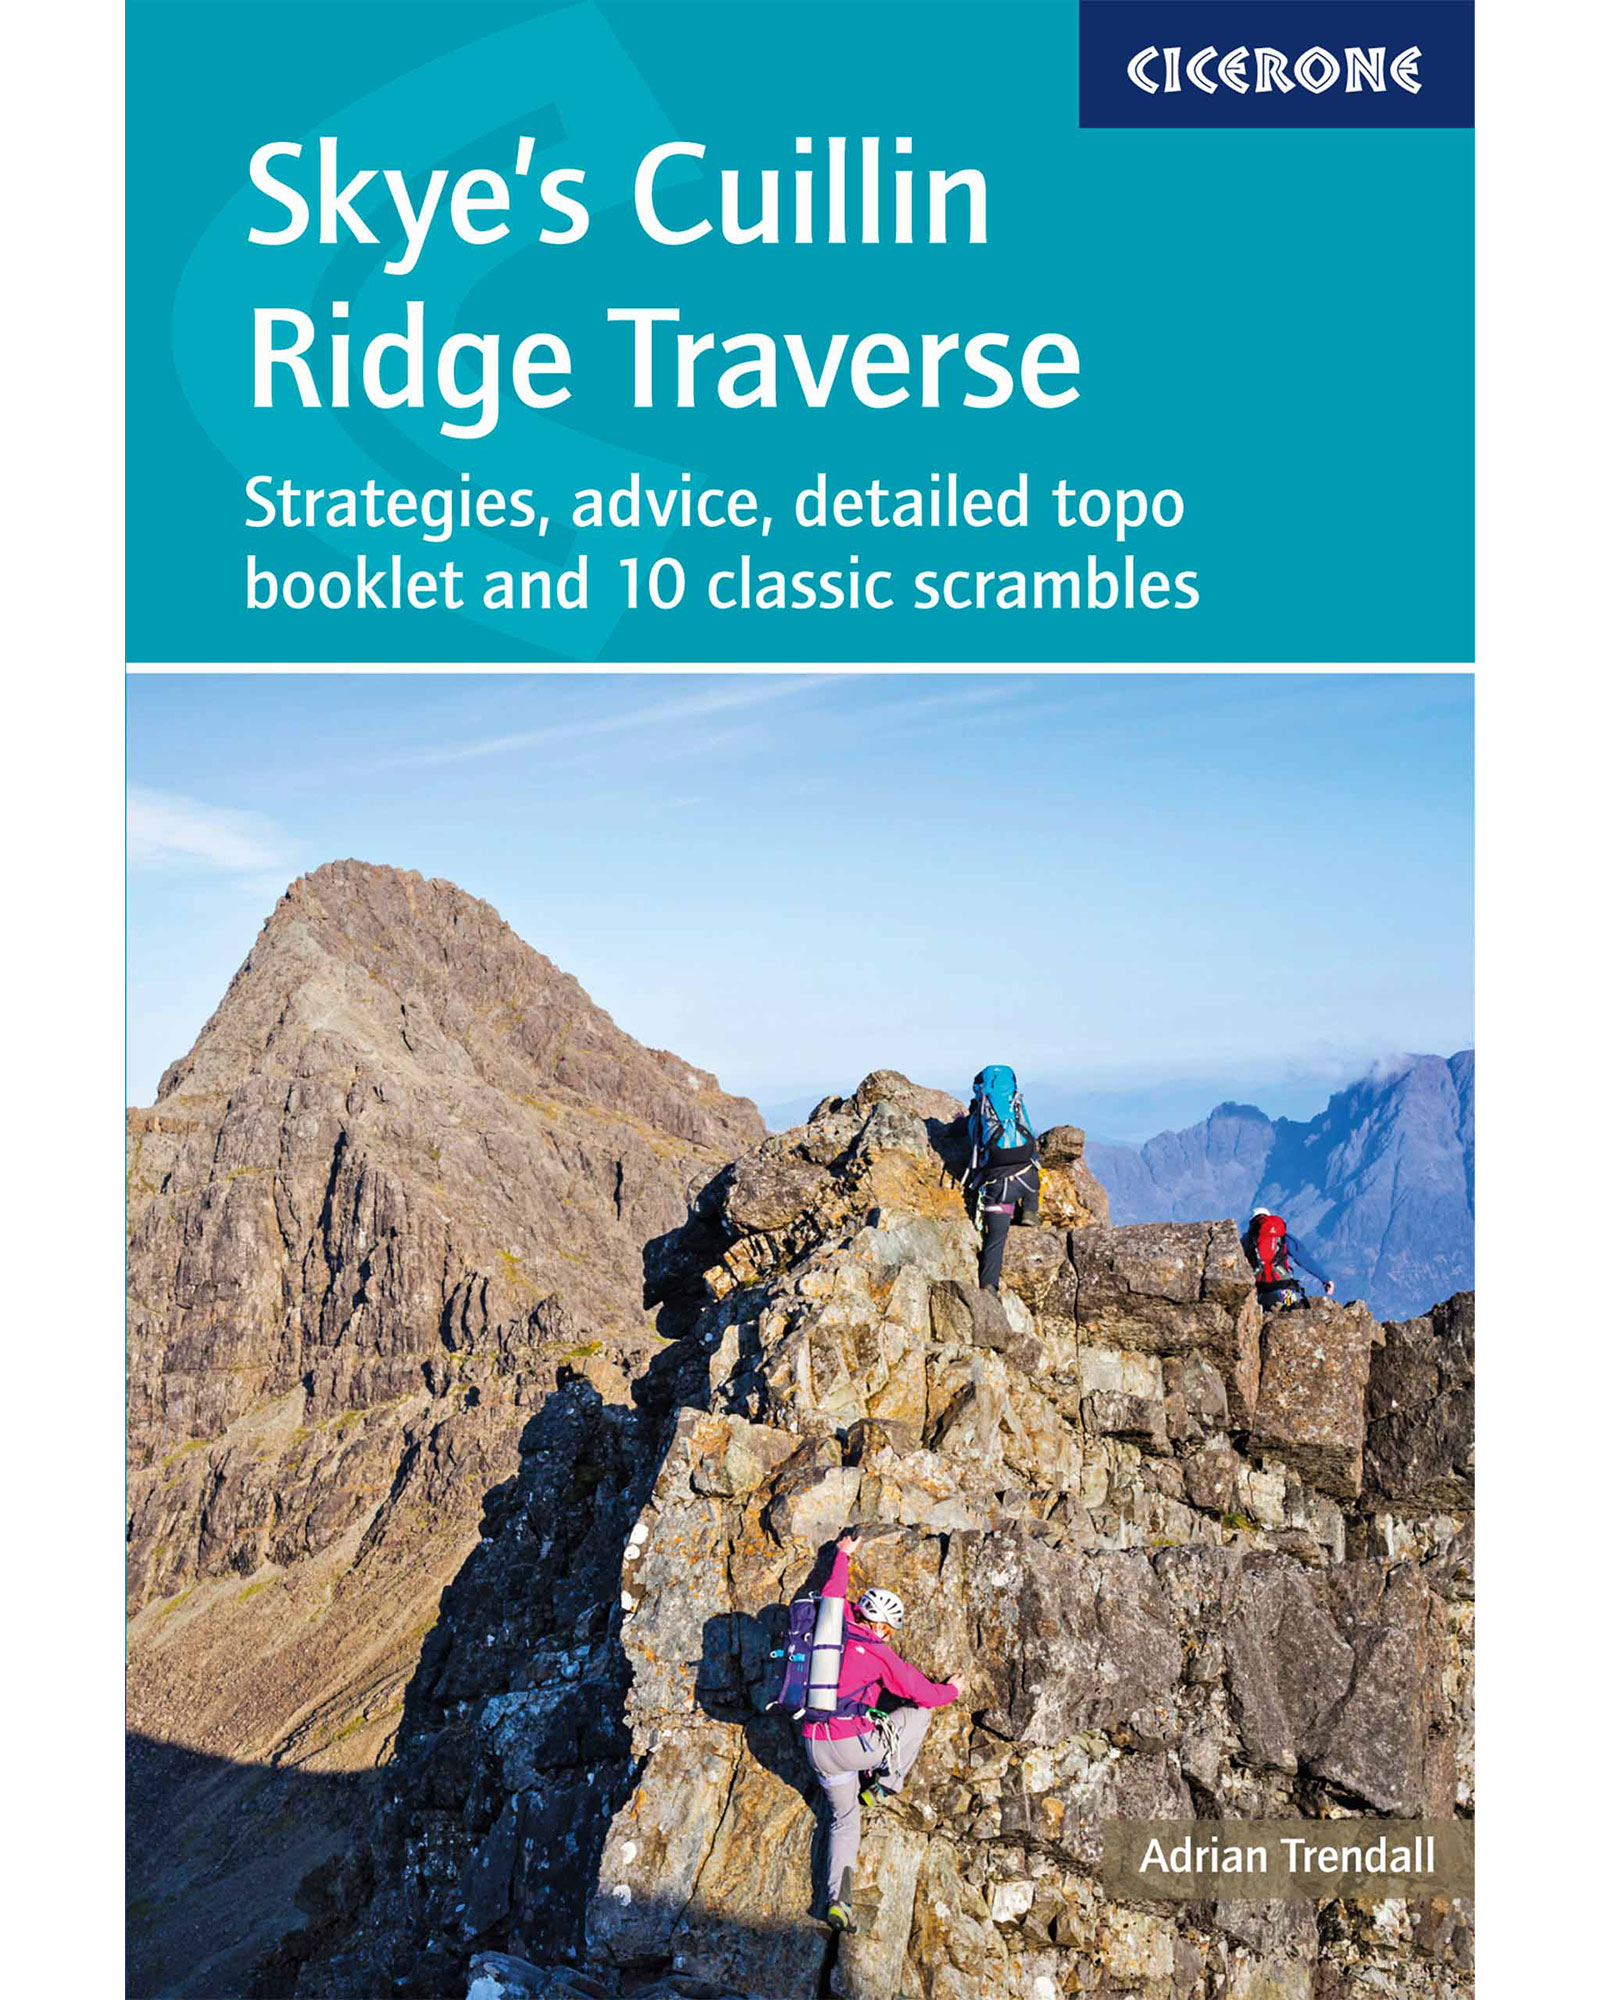 Cicerone Skyes Cuillin Ridge Traverse Guide Book